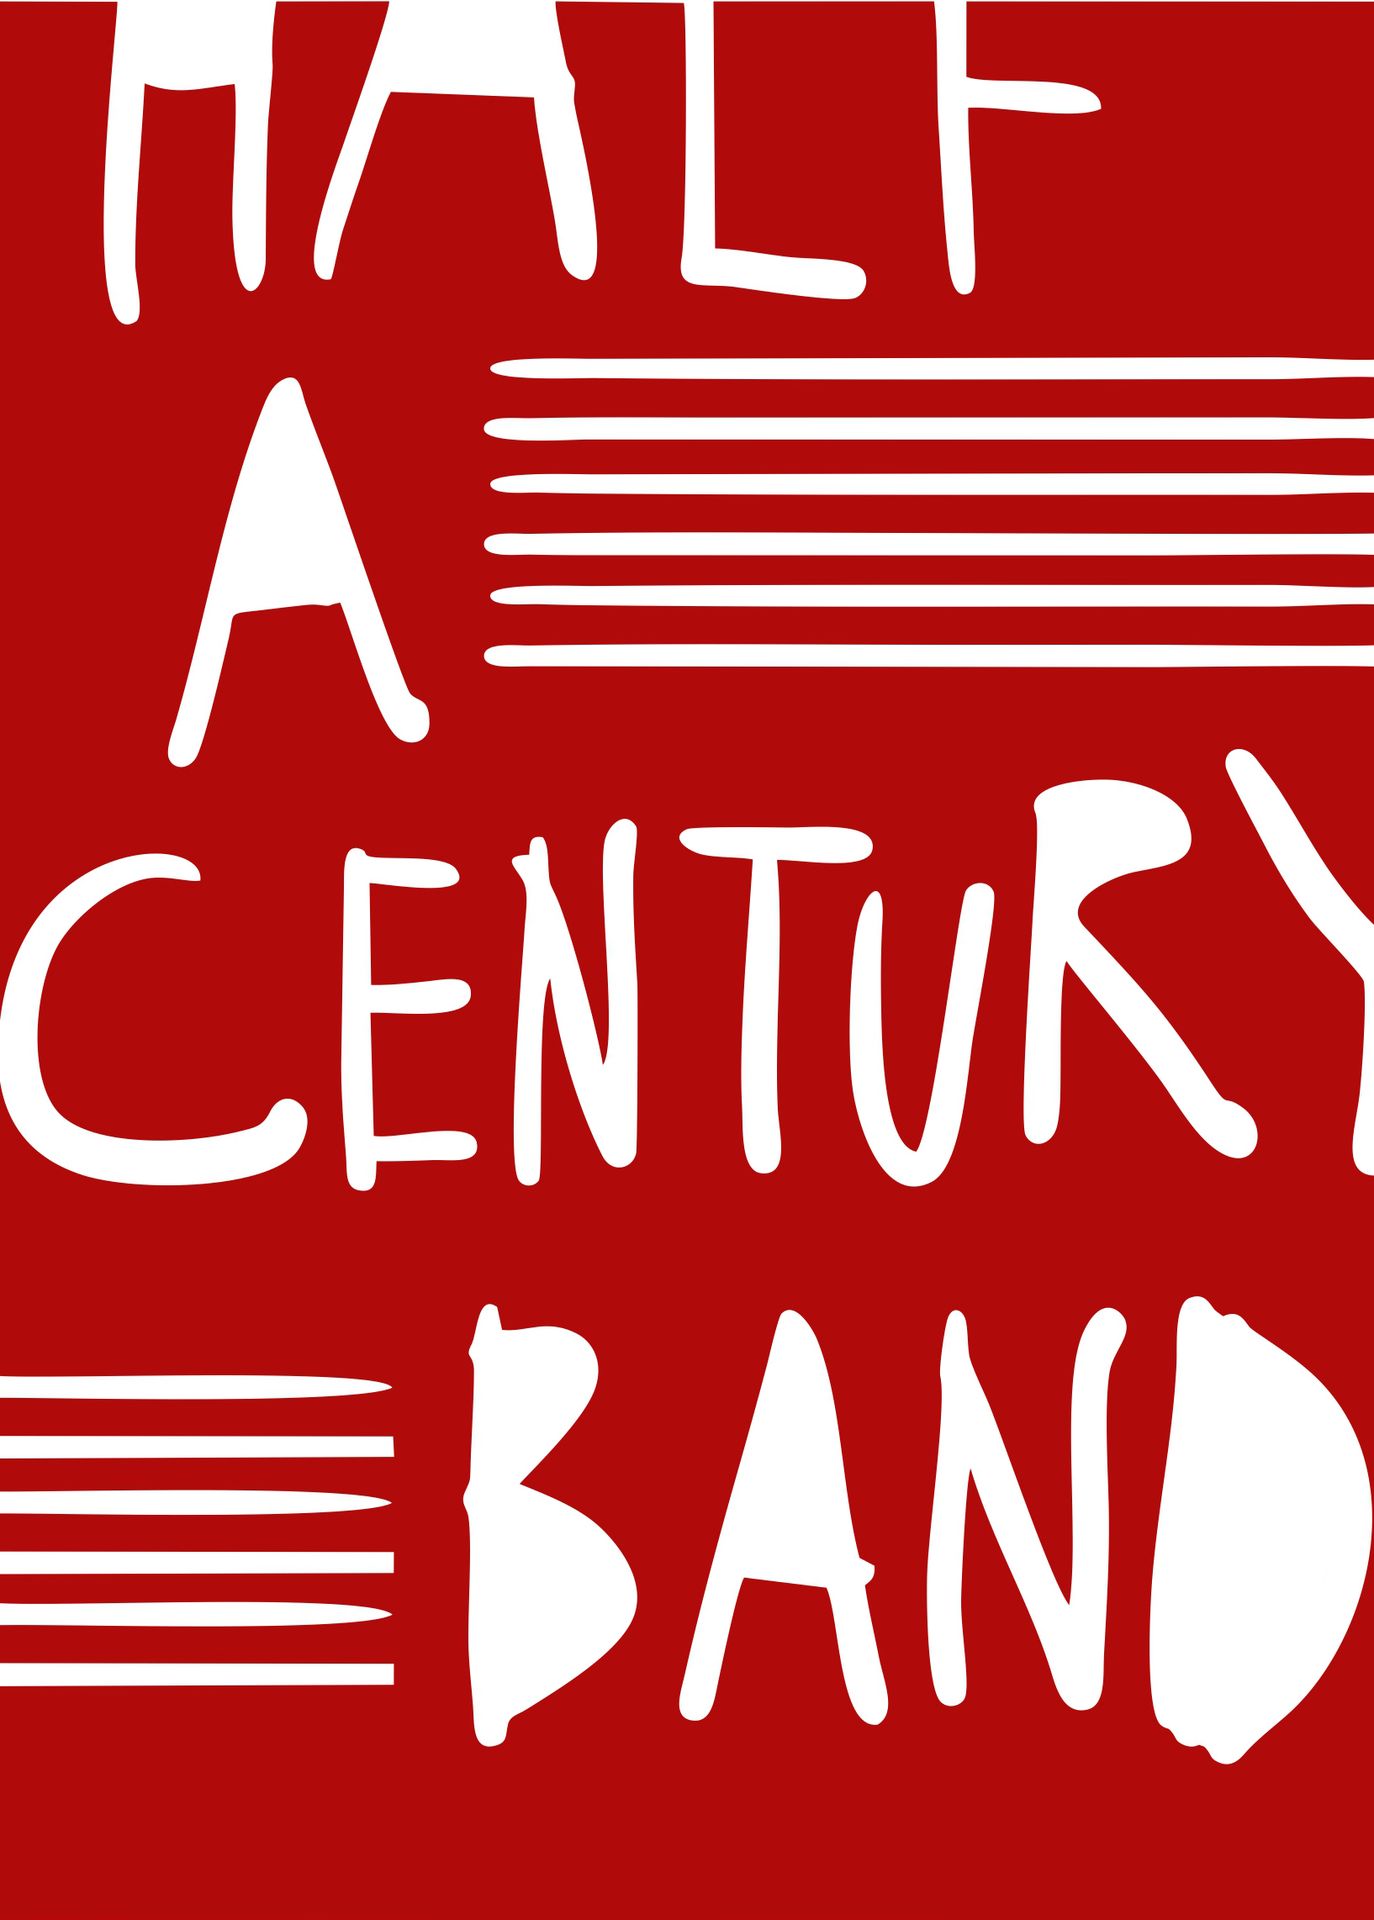 Half A Century Band, Logo